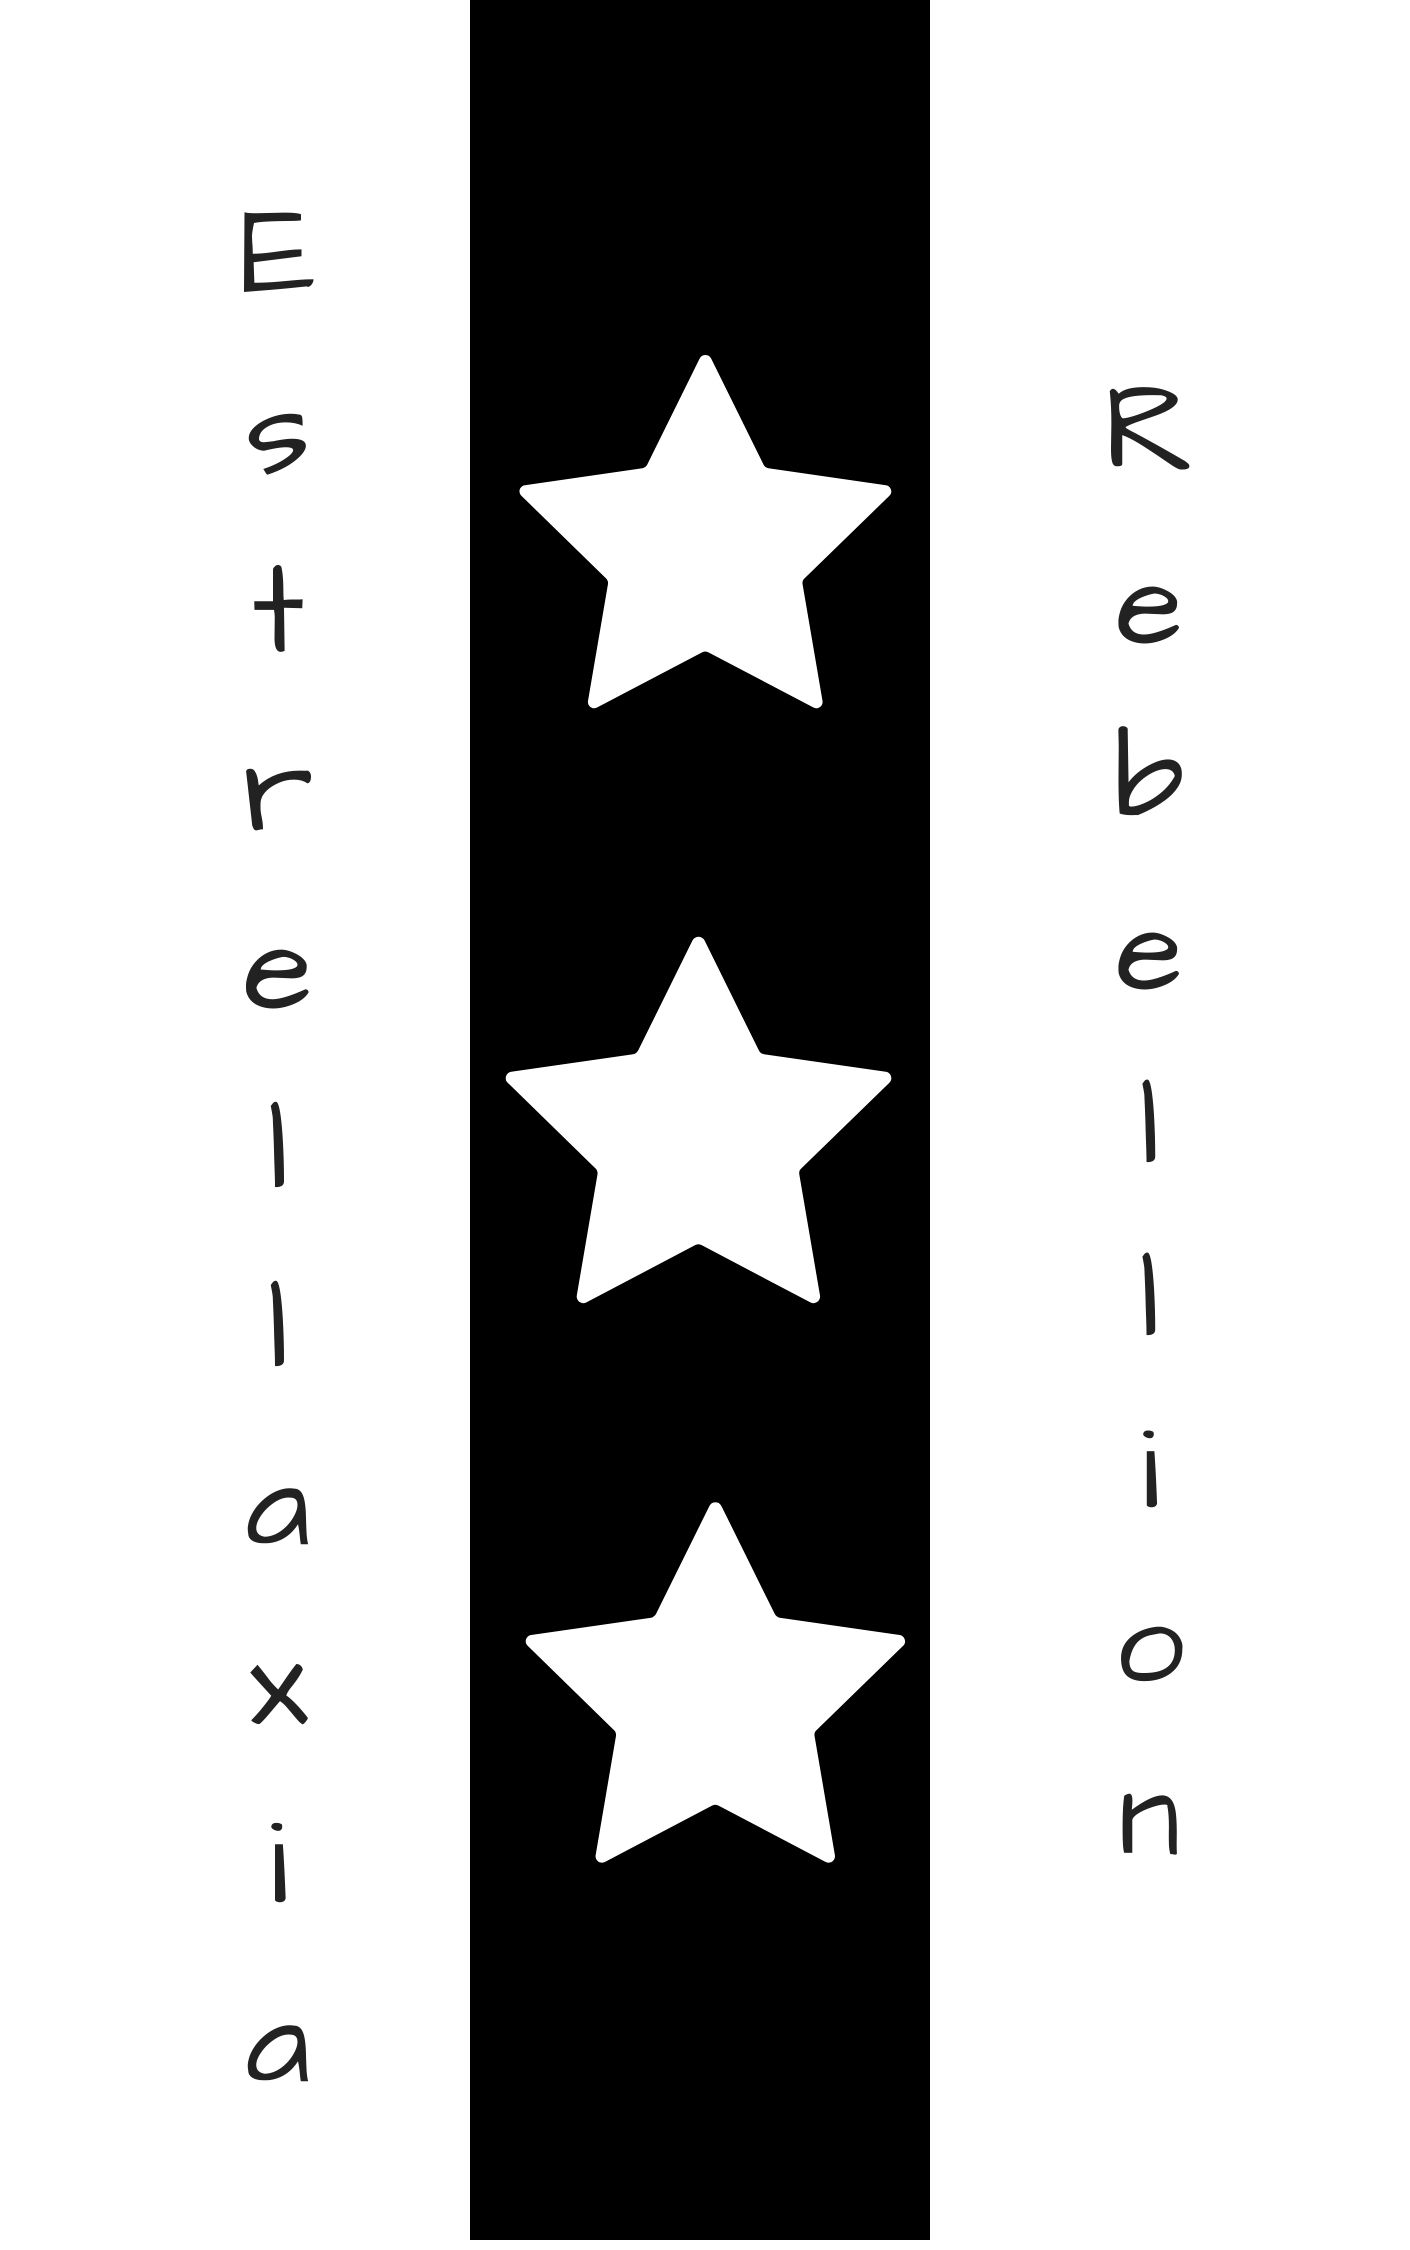 Estrellaxia Rebellion Checkmate versus Chequrered Flags Solitanu's Blog